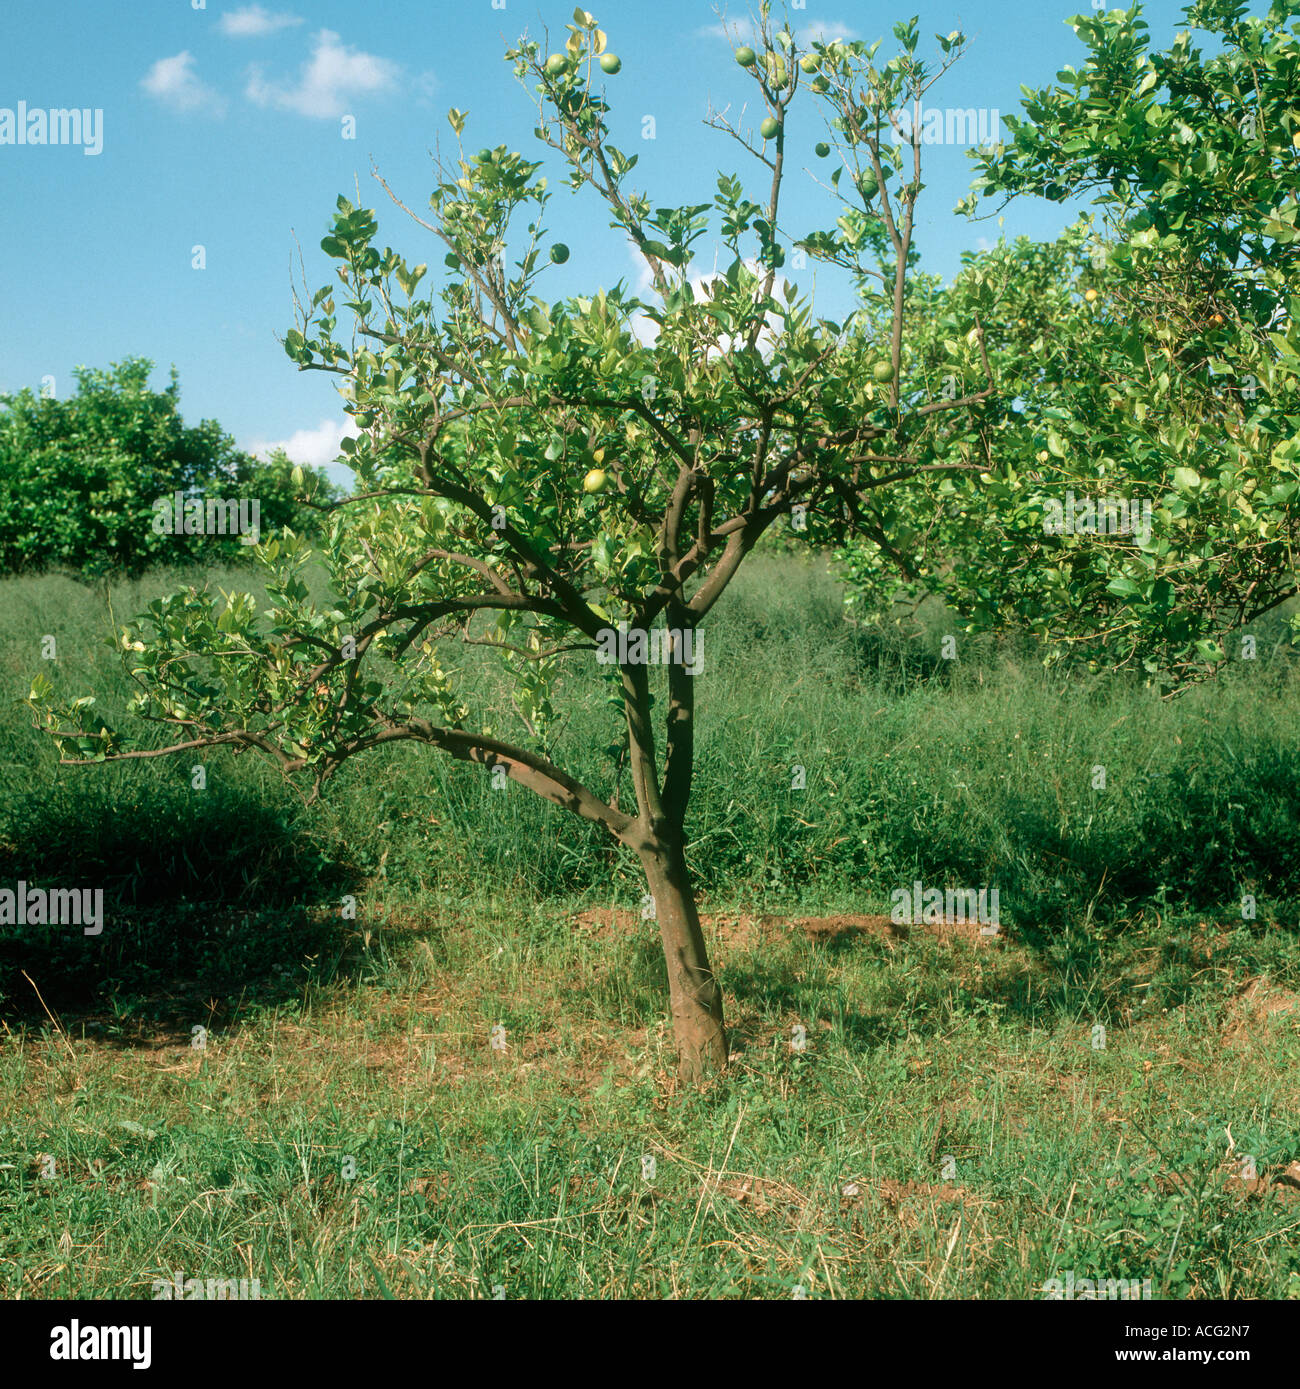 Citrus greening (Candidatus Liberibacter spp.) causing defoliation on a lemon tree Stock Photo